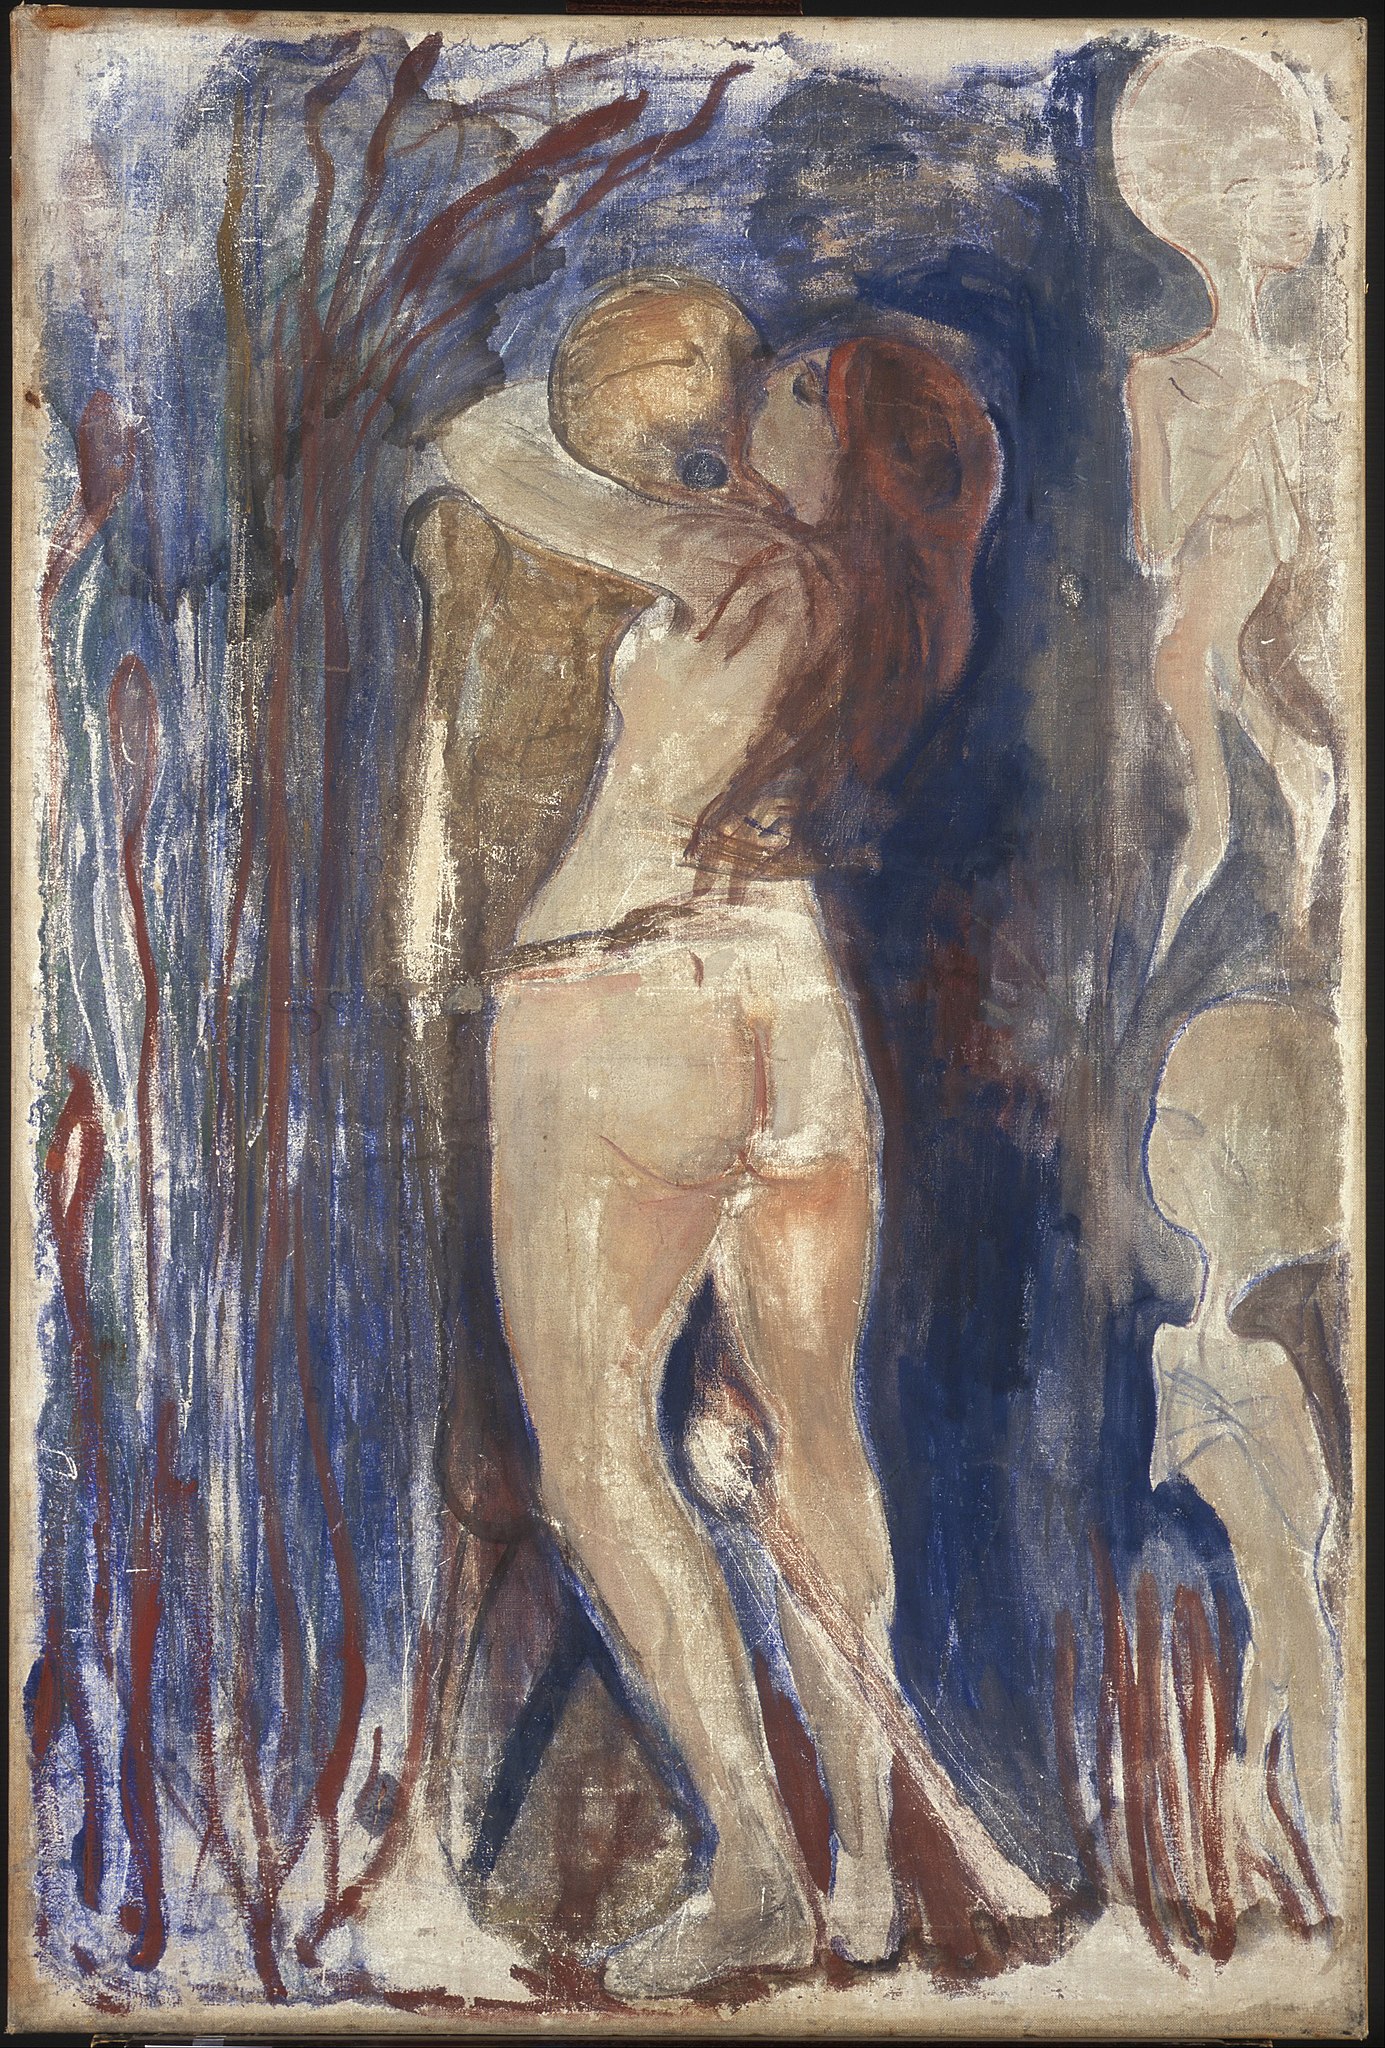 Muerte y vida by Edvard Munch - 1894 - 86 x 128 cm Museo Munch